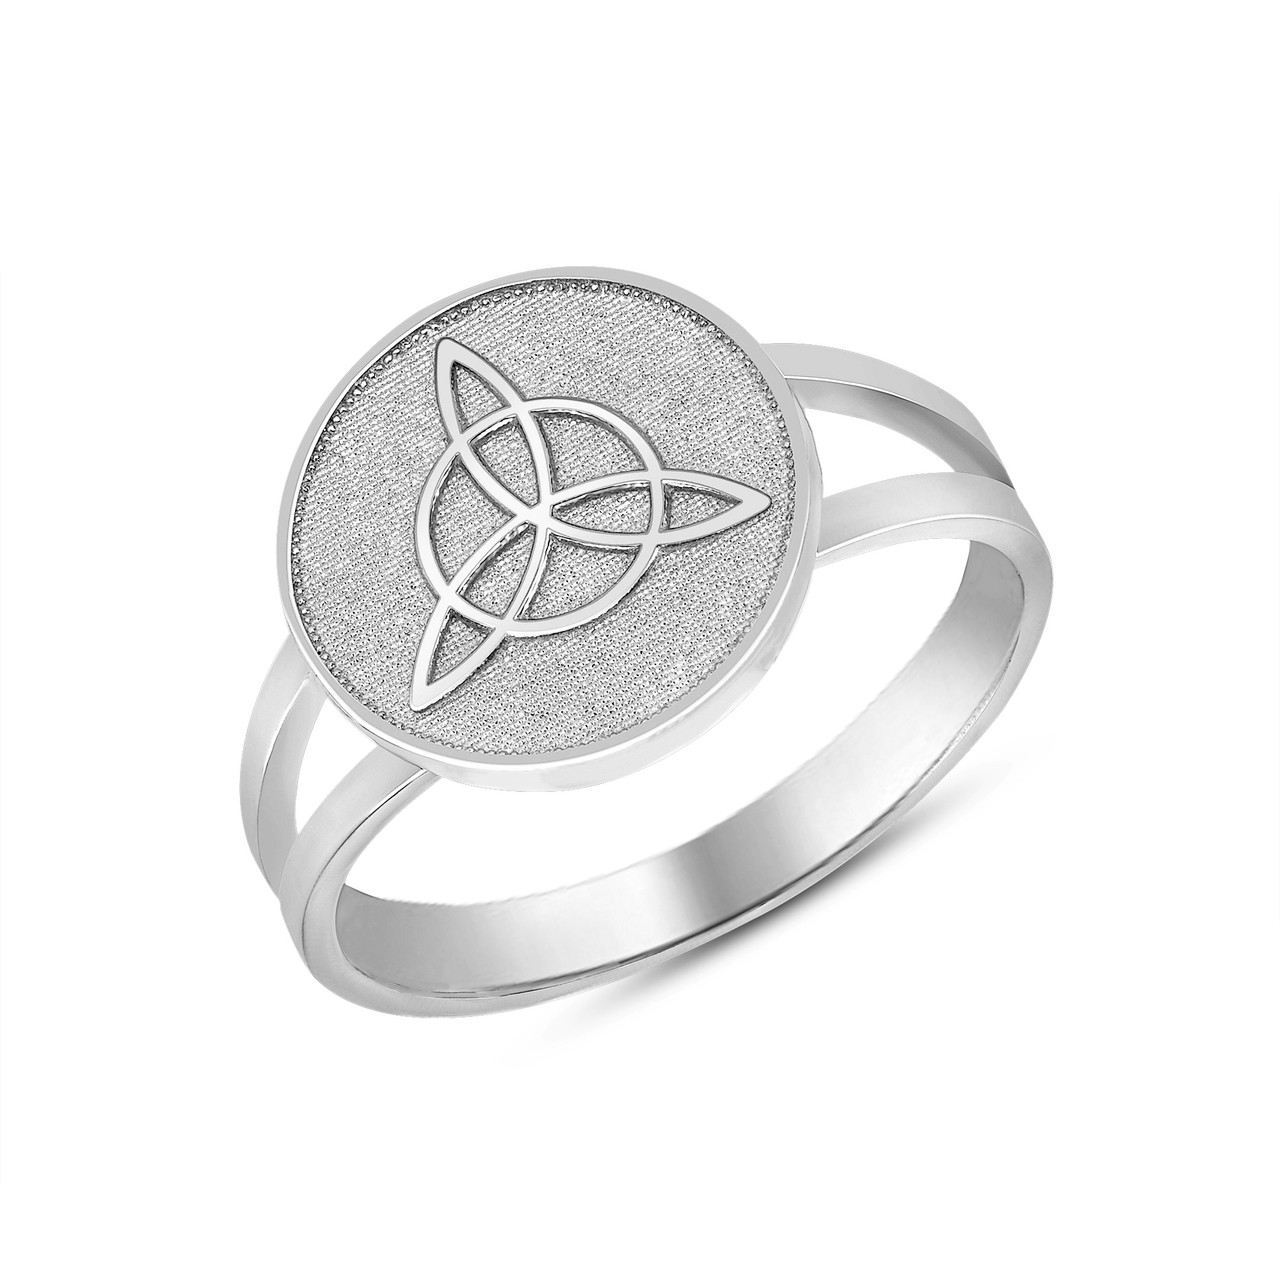 Mens Irish Jewelry, Heavy Sterling Silver Celtic Trinity Knot Bracelet at